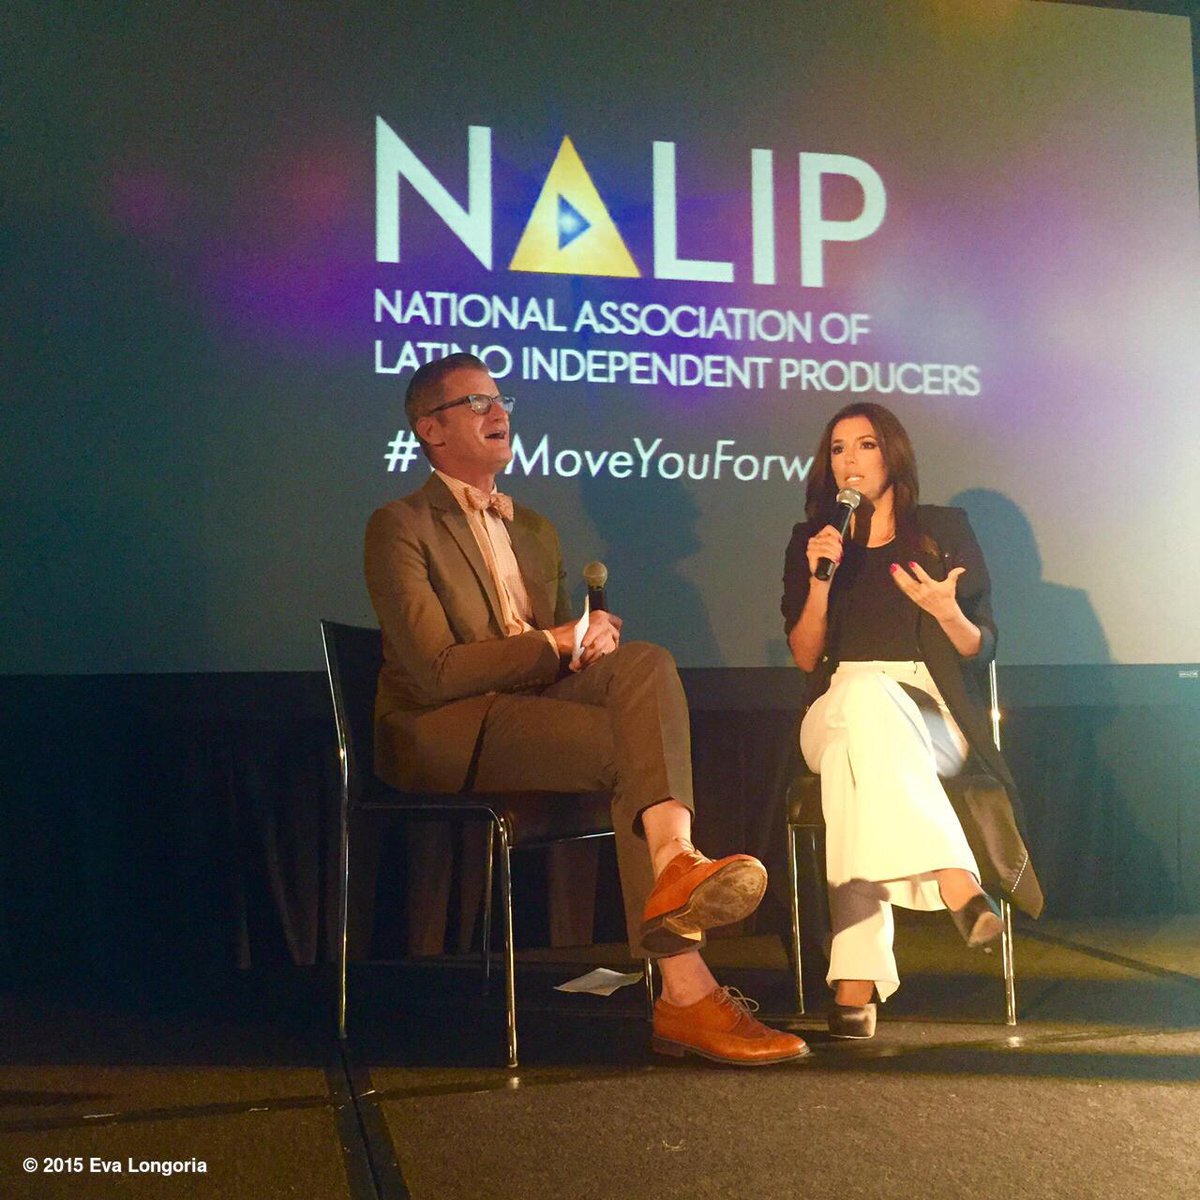 So honored to speak today at NALIP's Media Summit @nalip_org #nalip #mediasummit #2morrow2gether http://t.co/cJB3wDPGiA